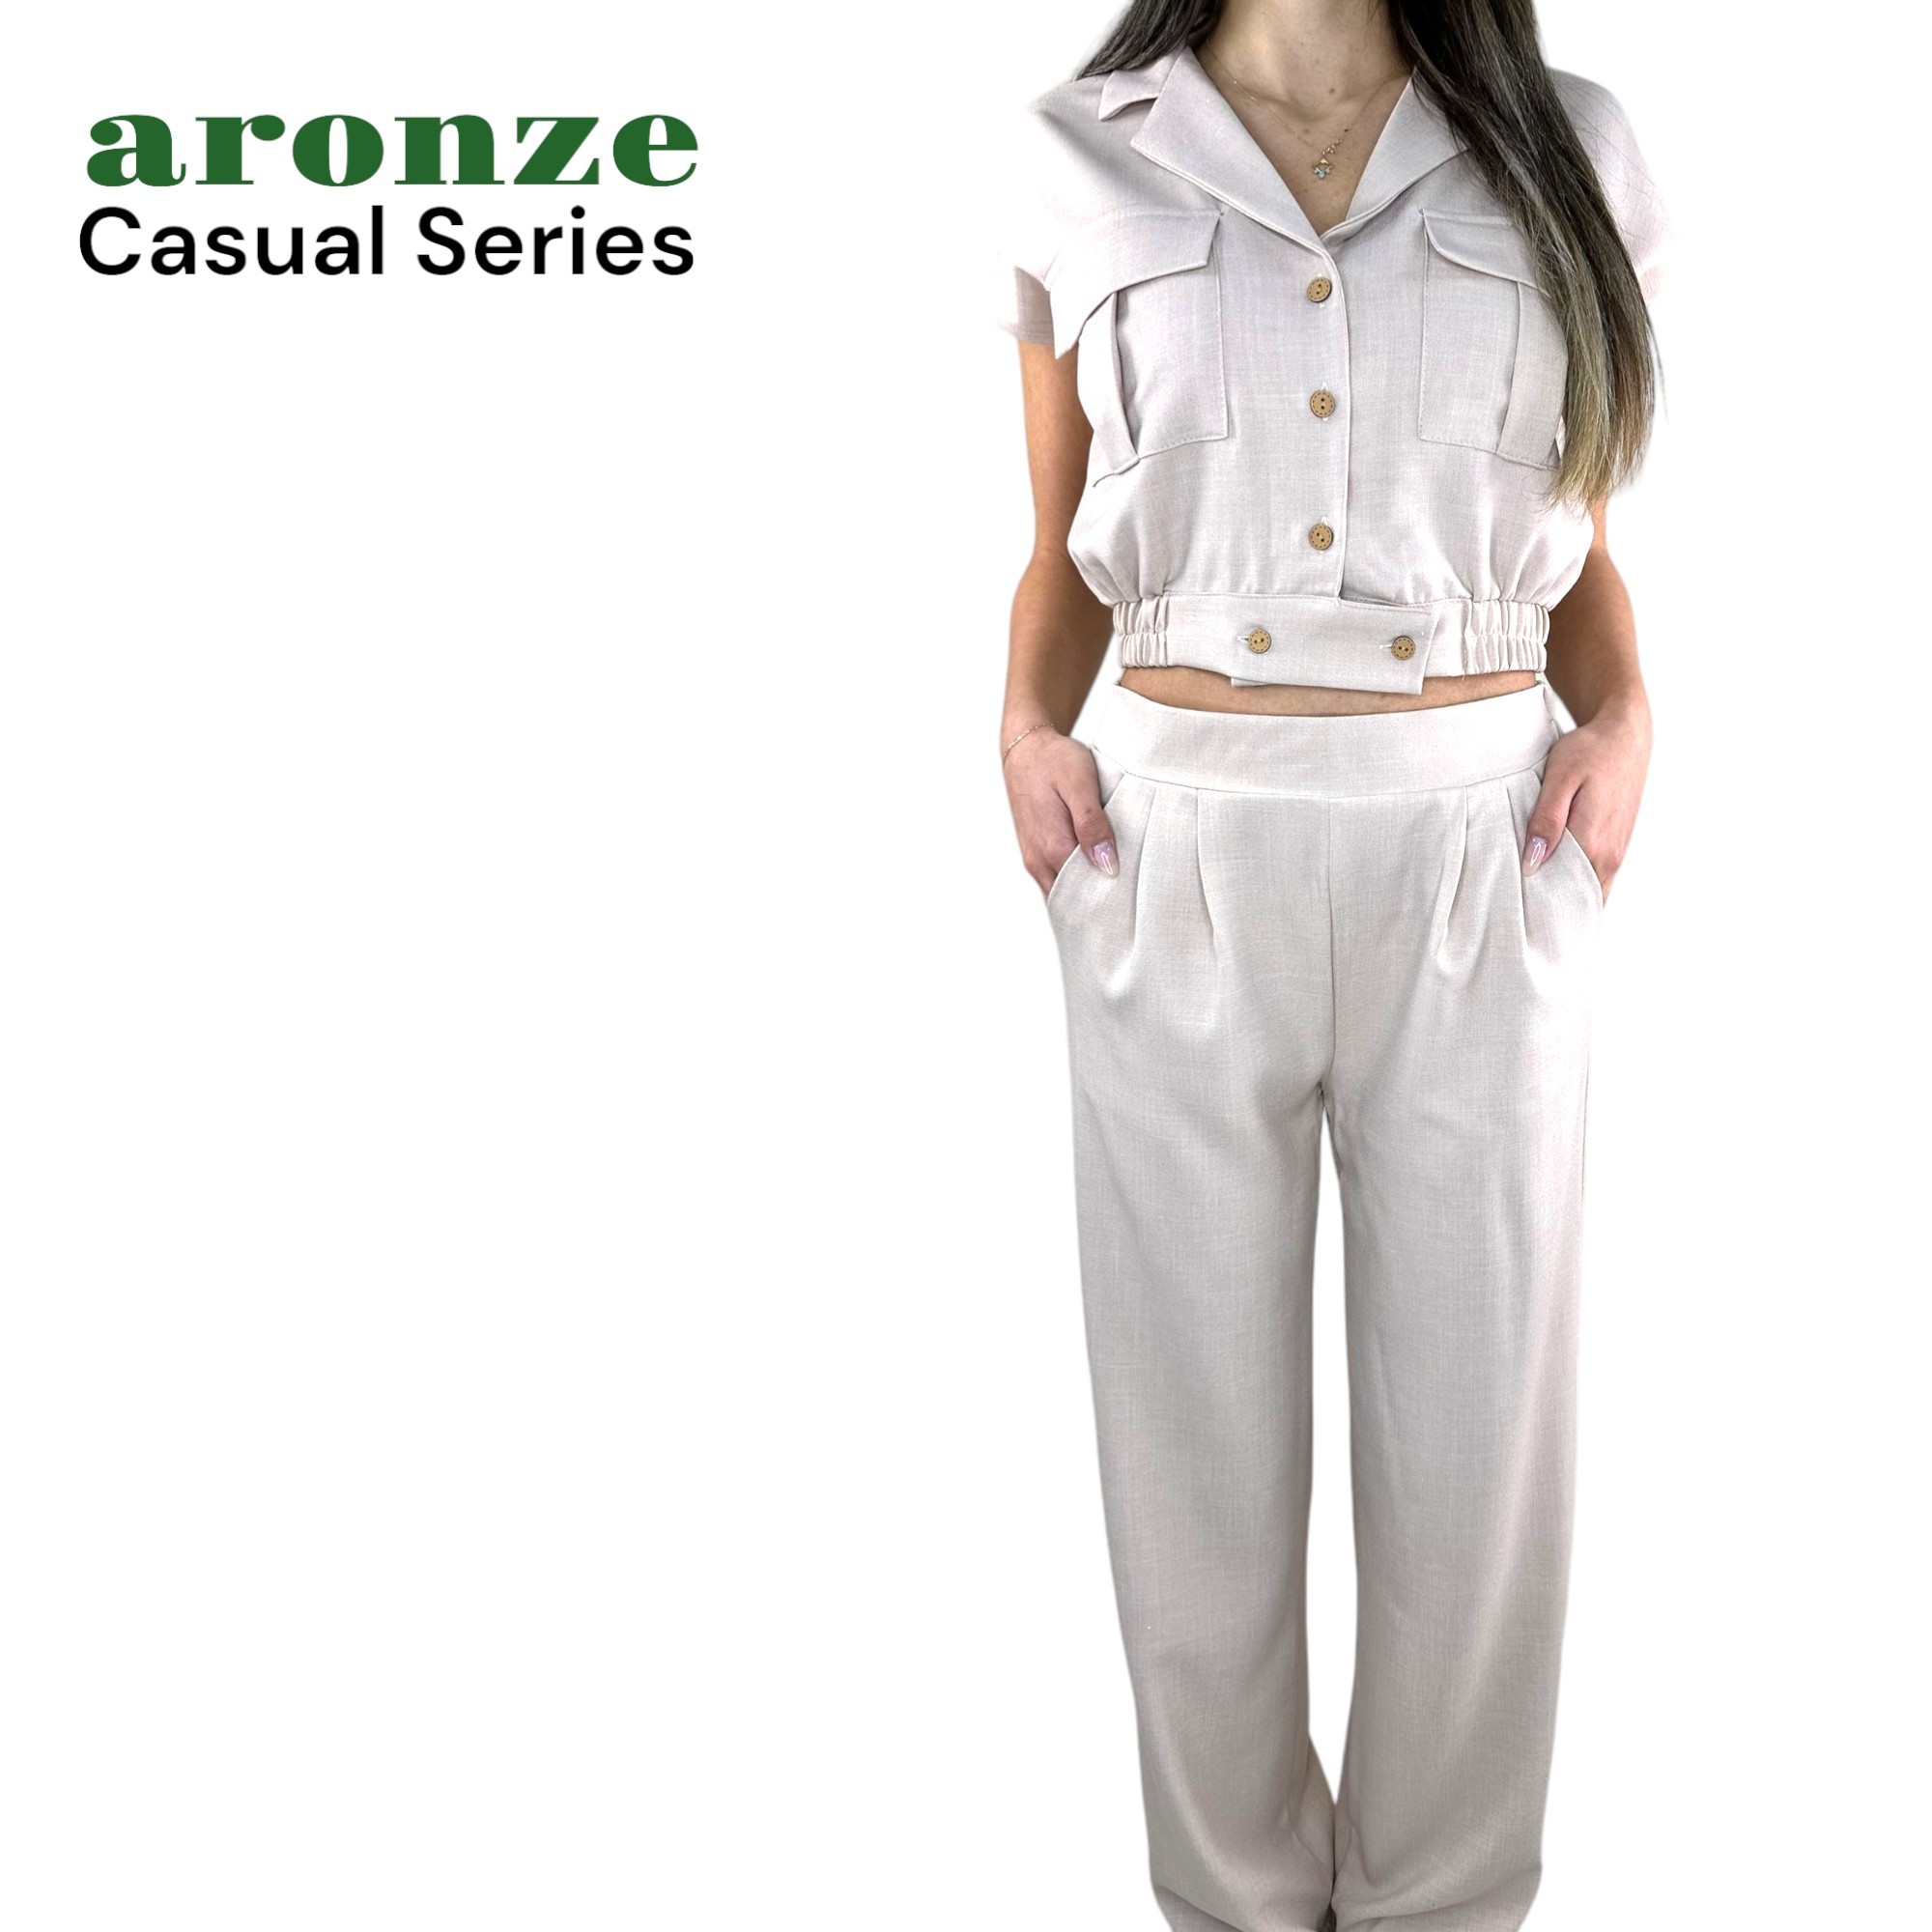 Aronze Casual Series %100 Organik Türk Pamuğu Crop Pantolon Bej Renk Takım